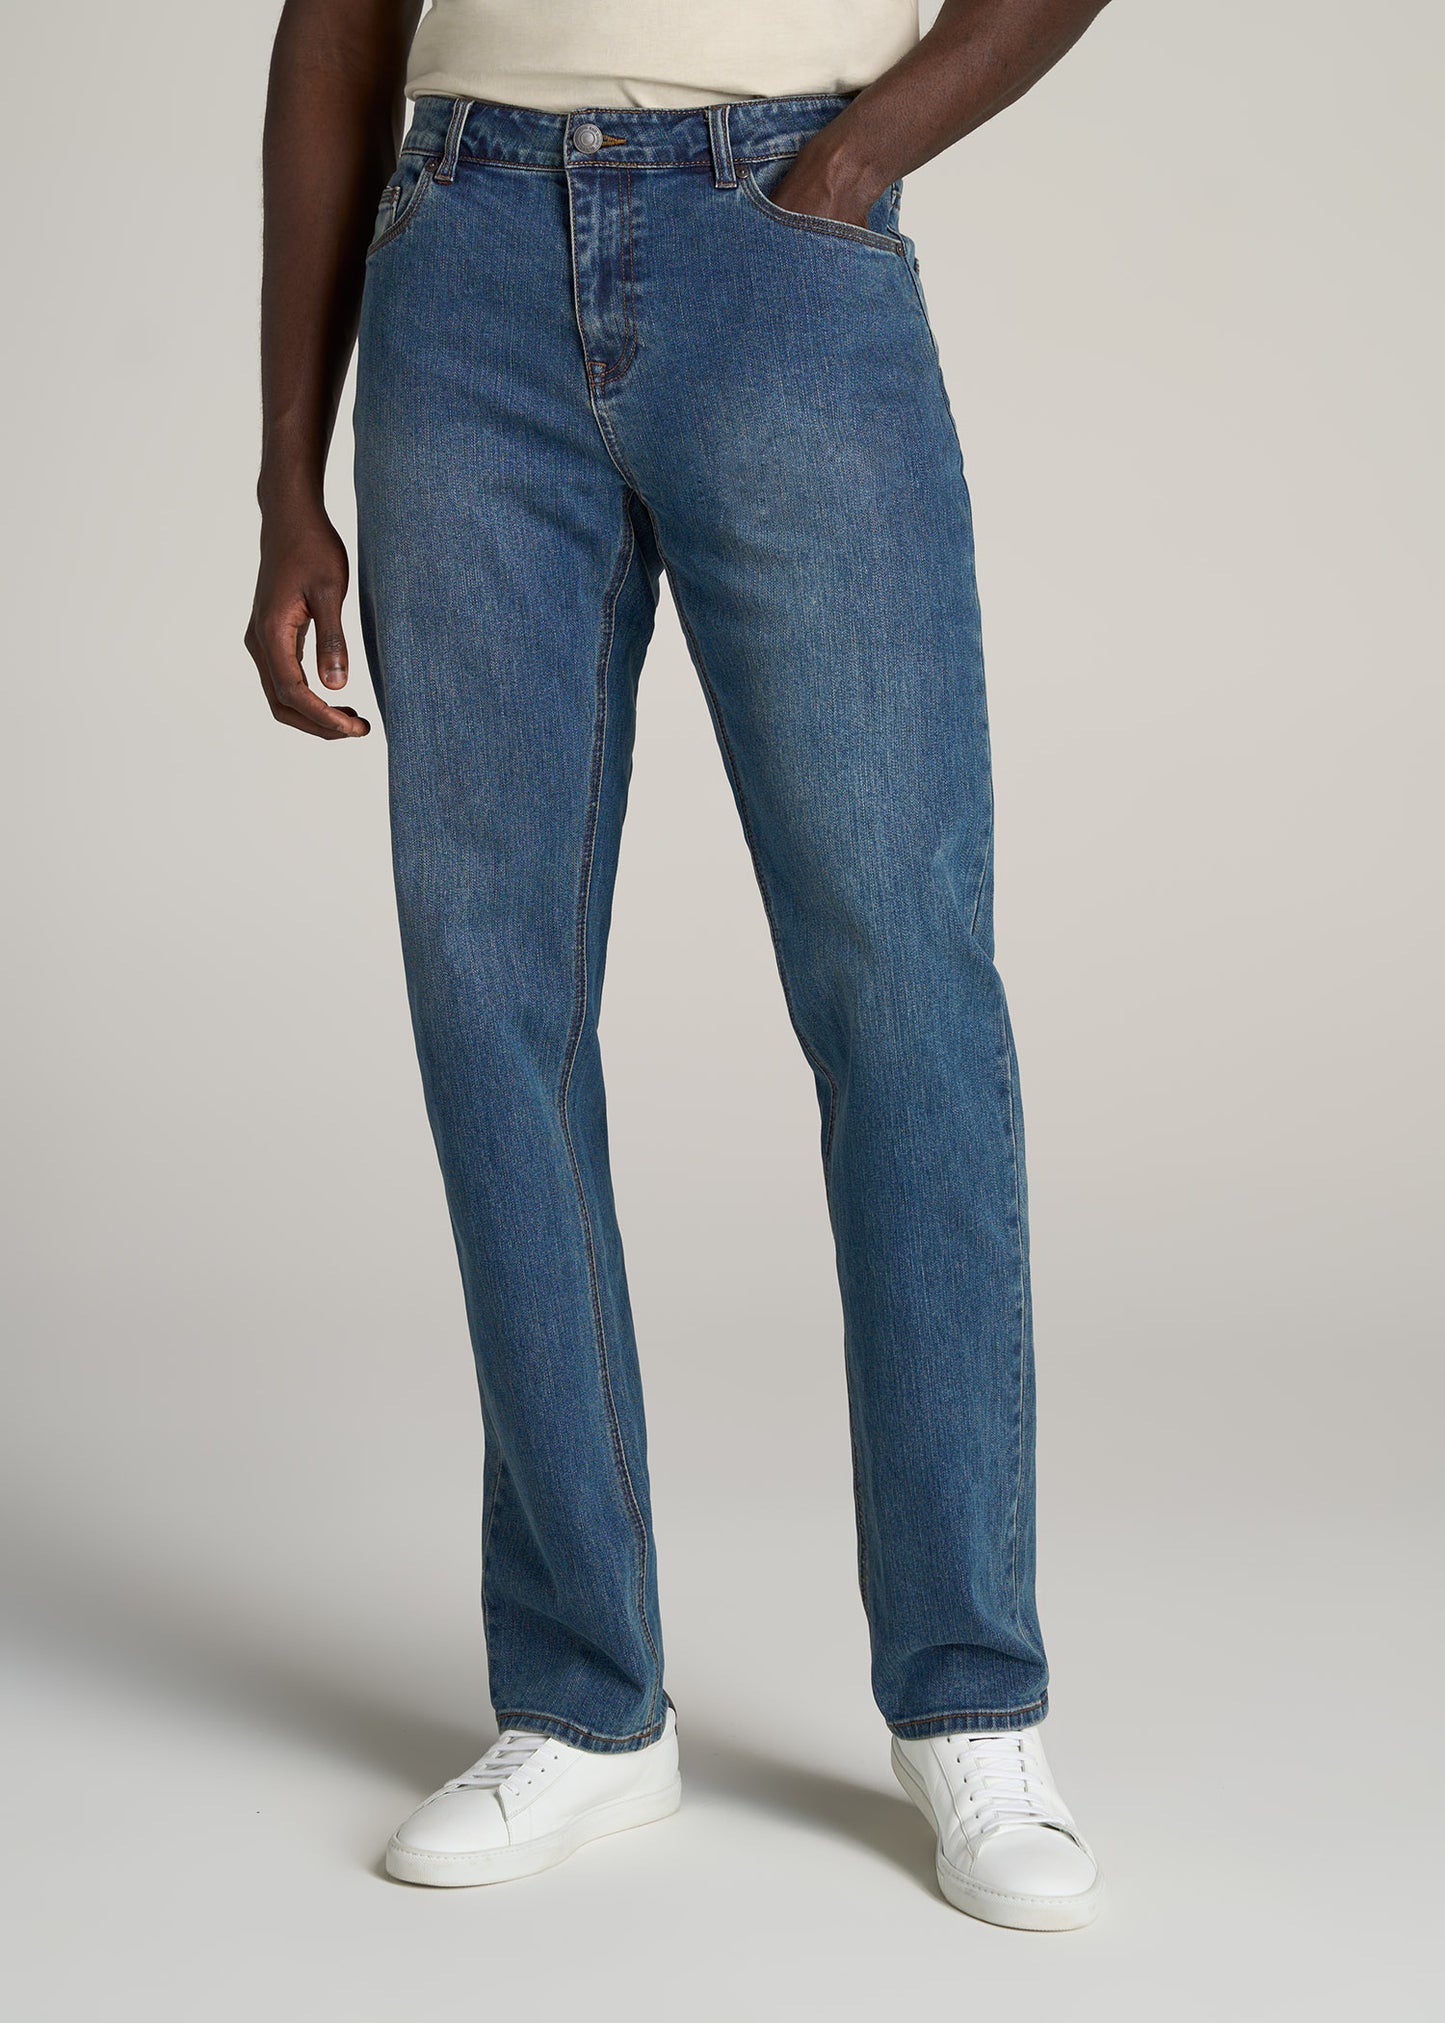       American-Tall-Men-LJS-Rugged-J1-STRAIGHT-LEG-Jeans-Worker-Blue-front